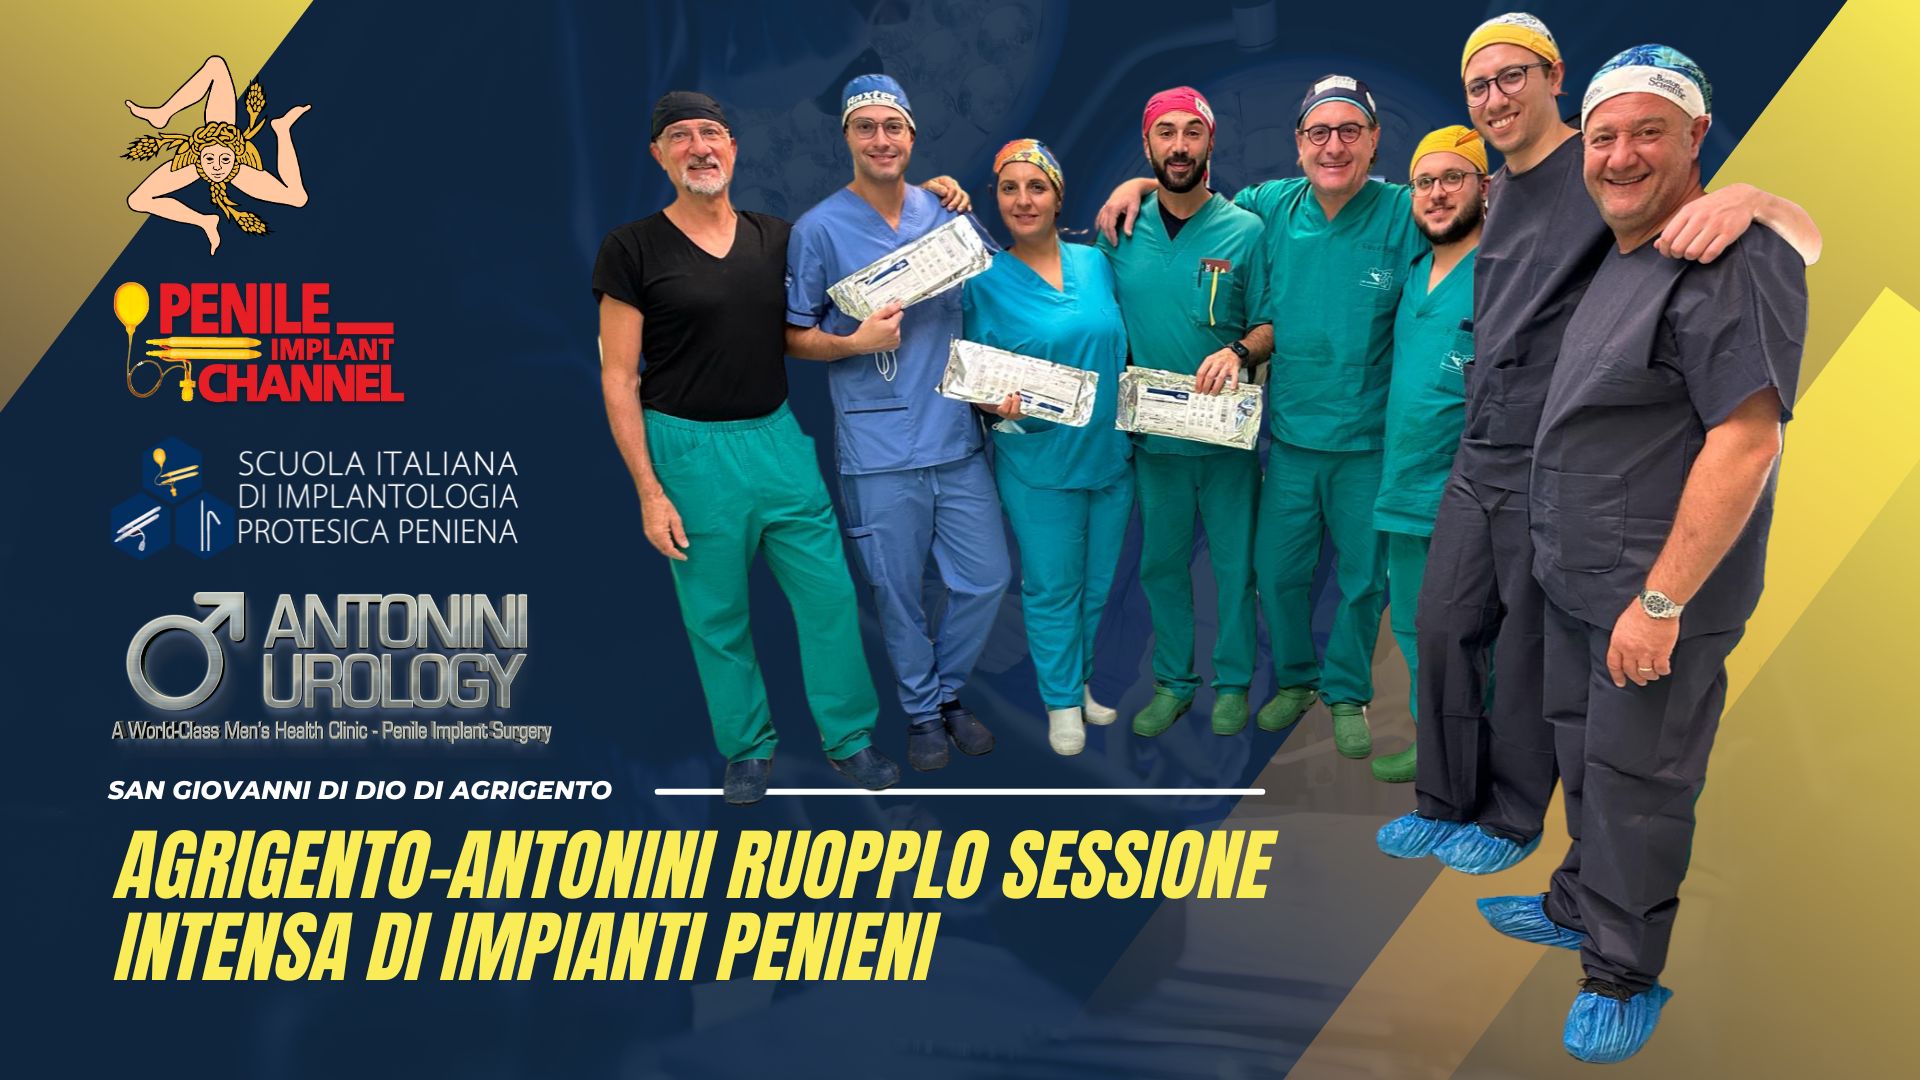 Agrigento-Antonini Ruoppolo intense session on Penile Implants